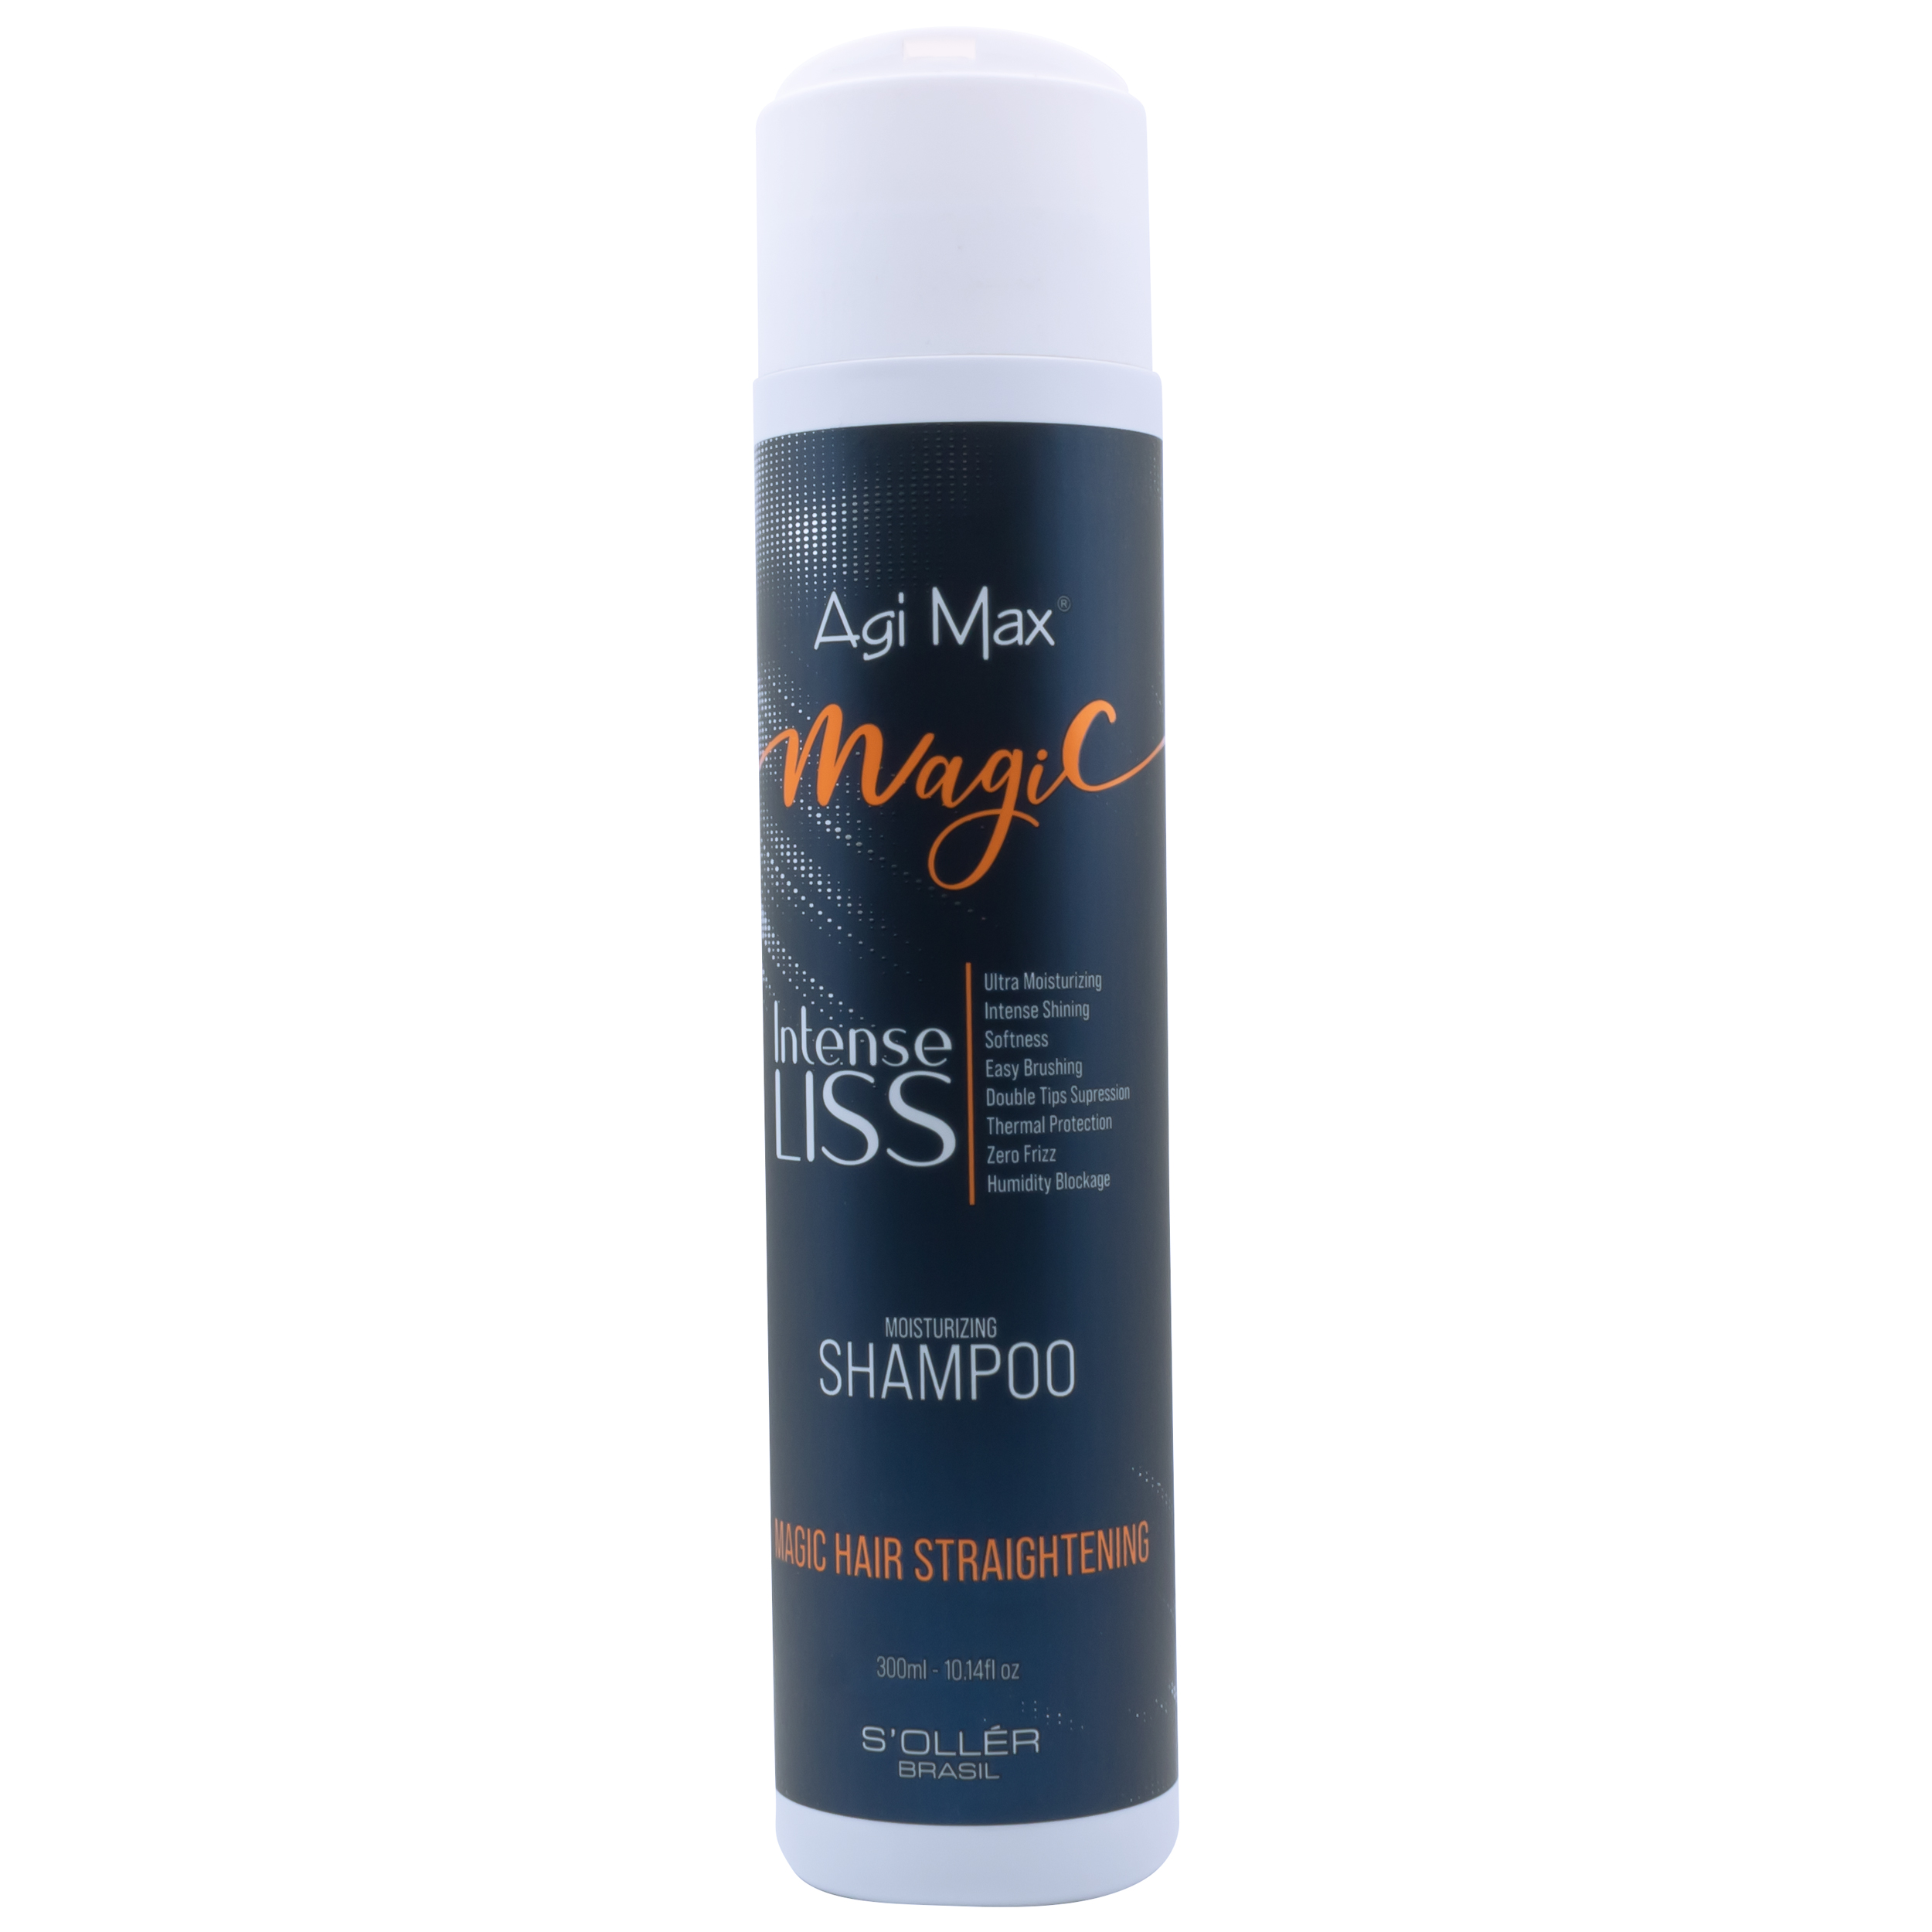 Produto Agi Max Magic Liss Shampoo | Coleção Magic Liss